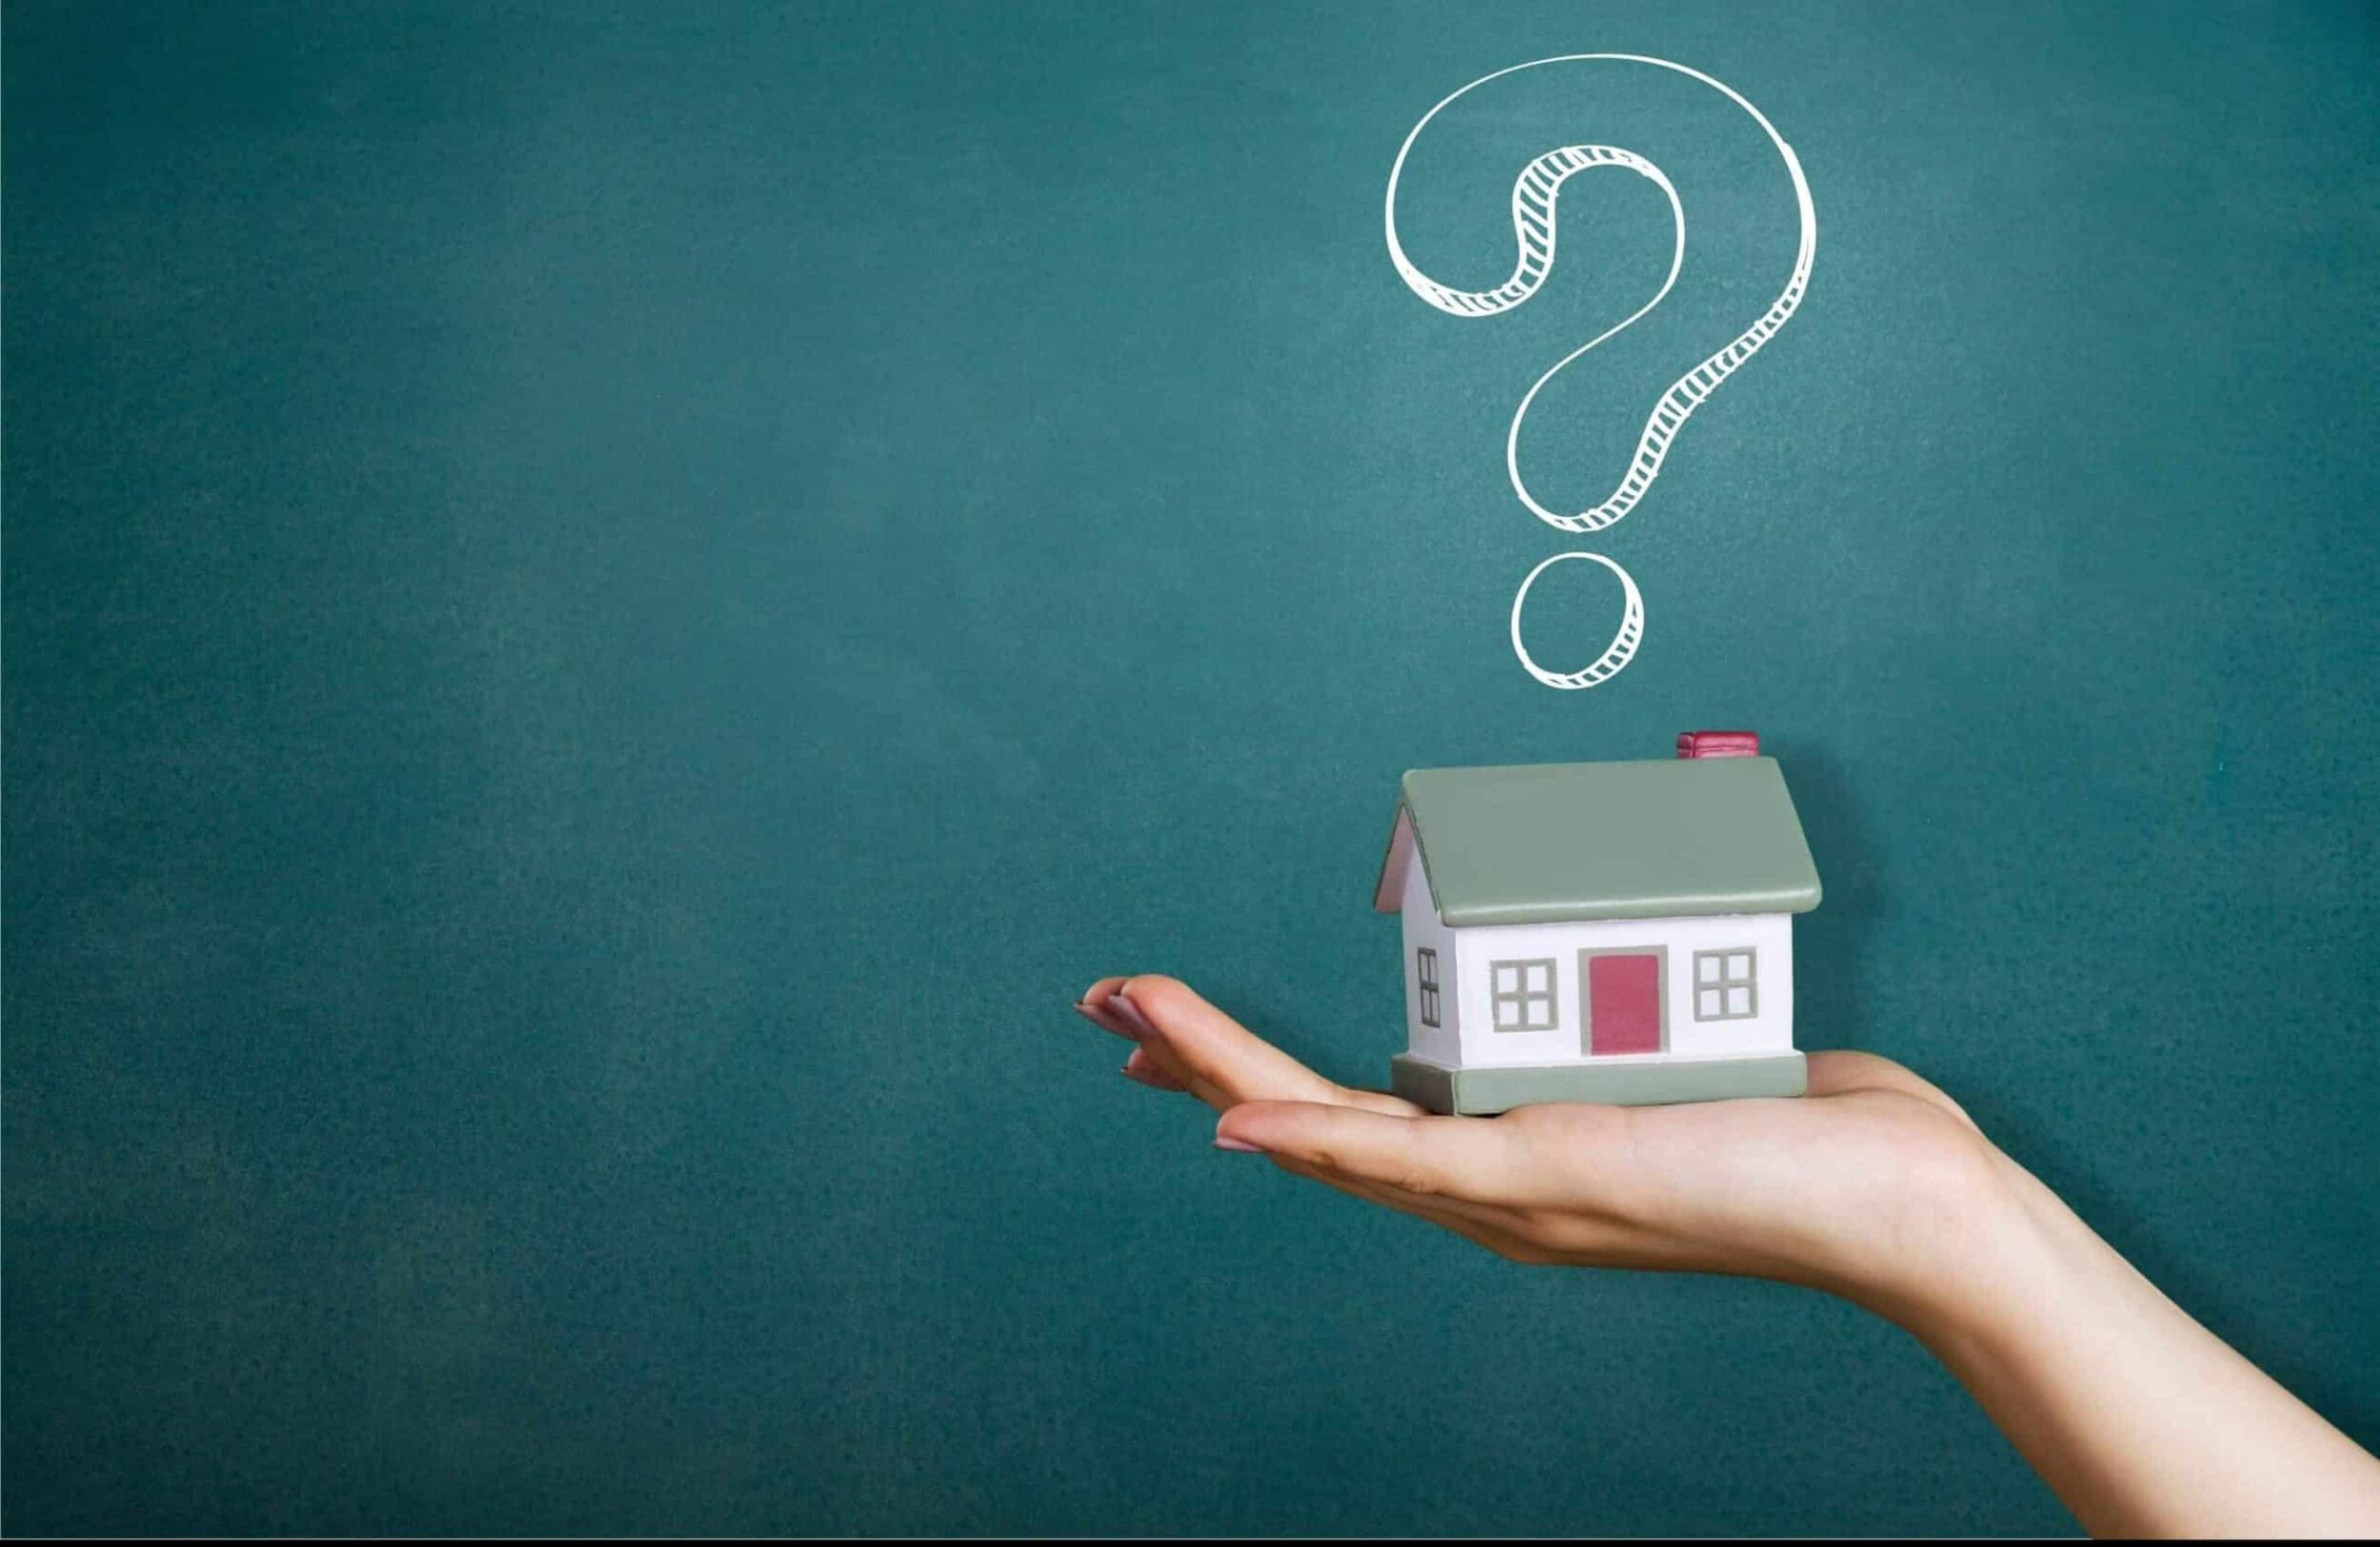 2019 housing market forecast: should you buy a home?